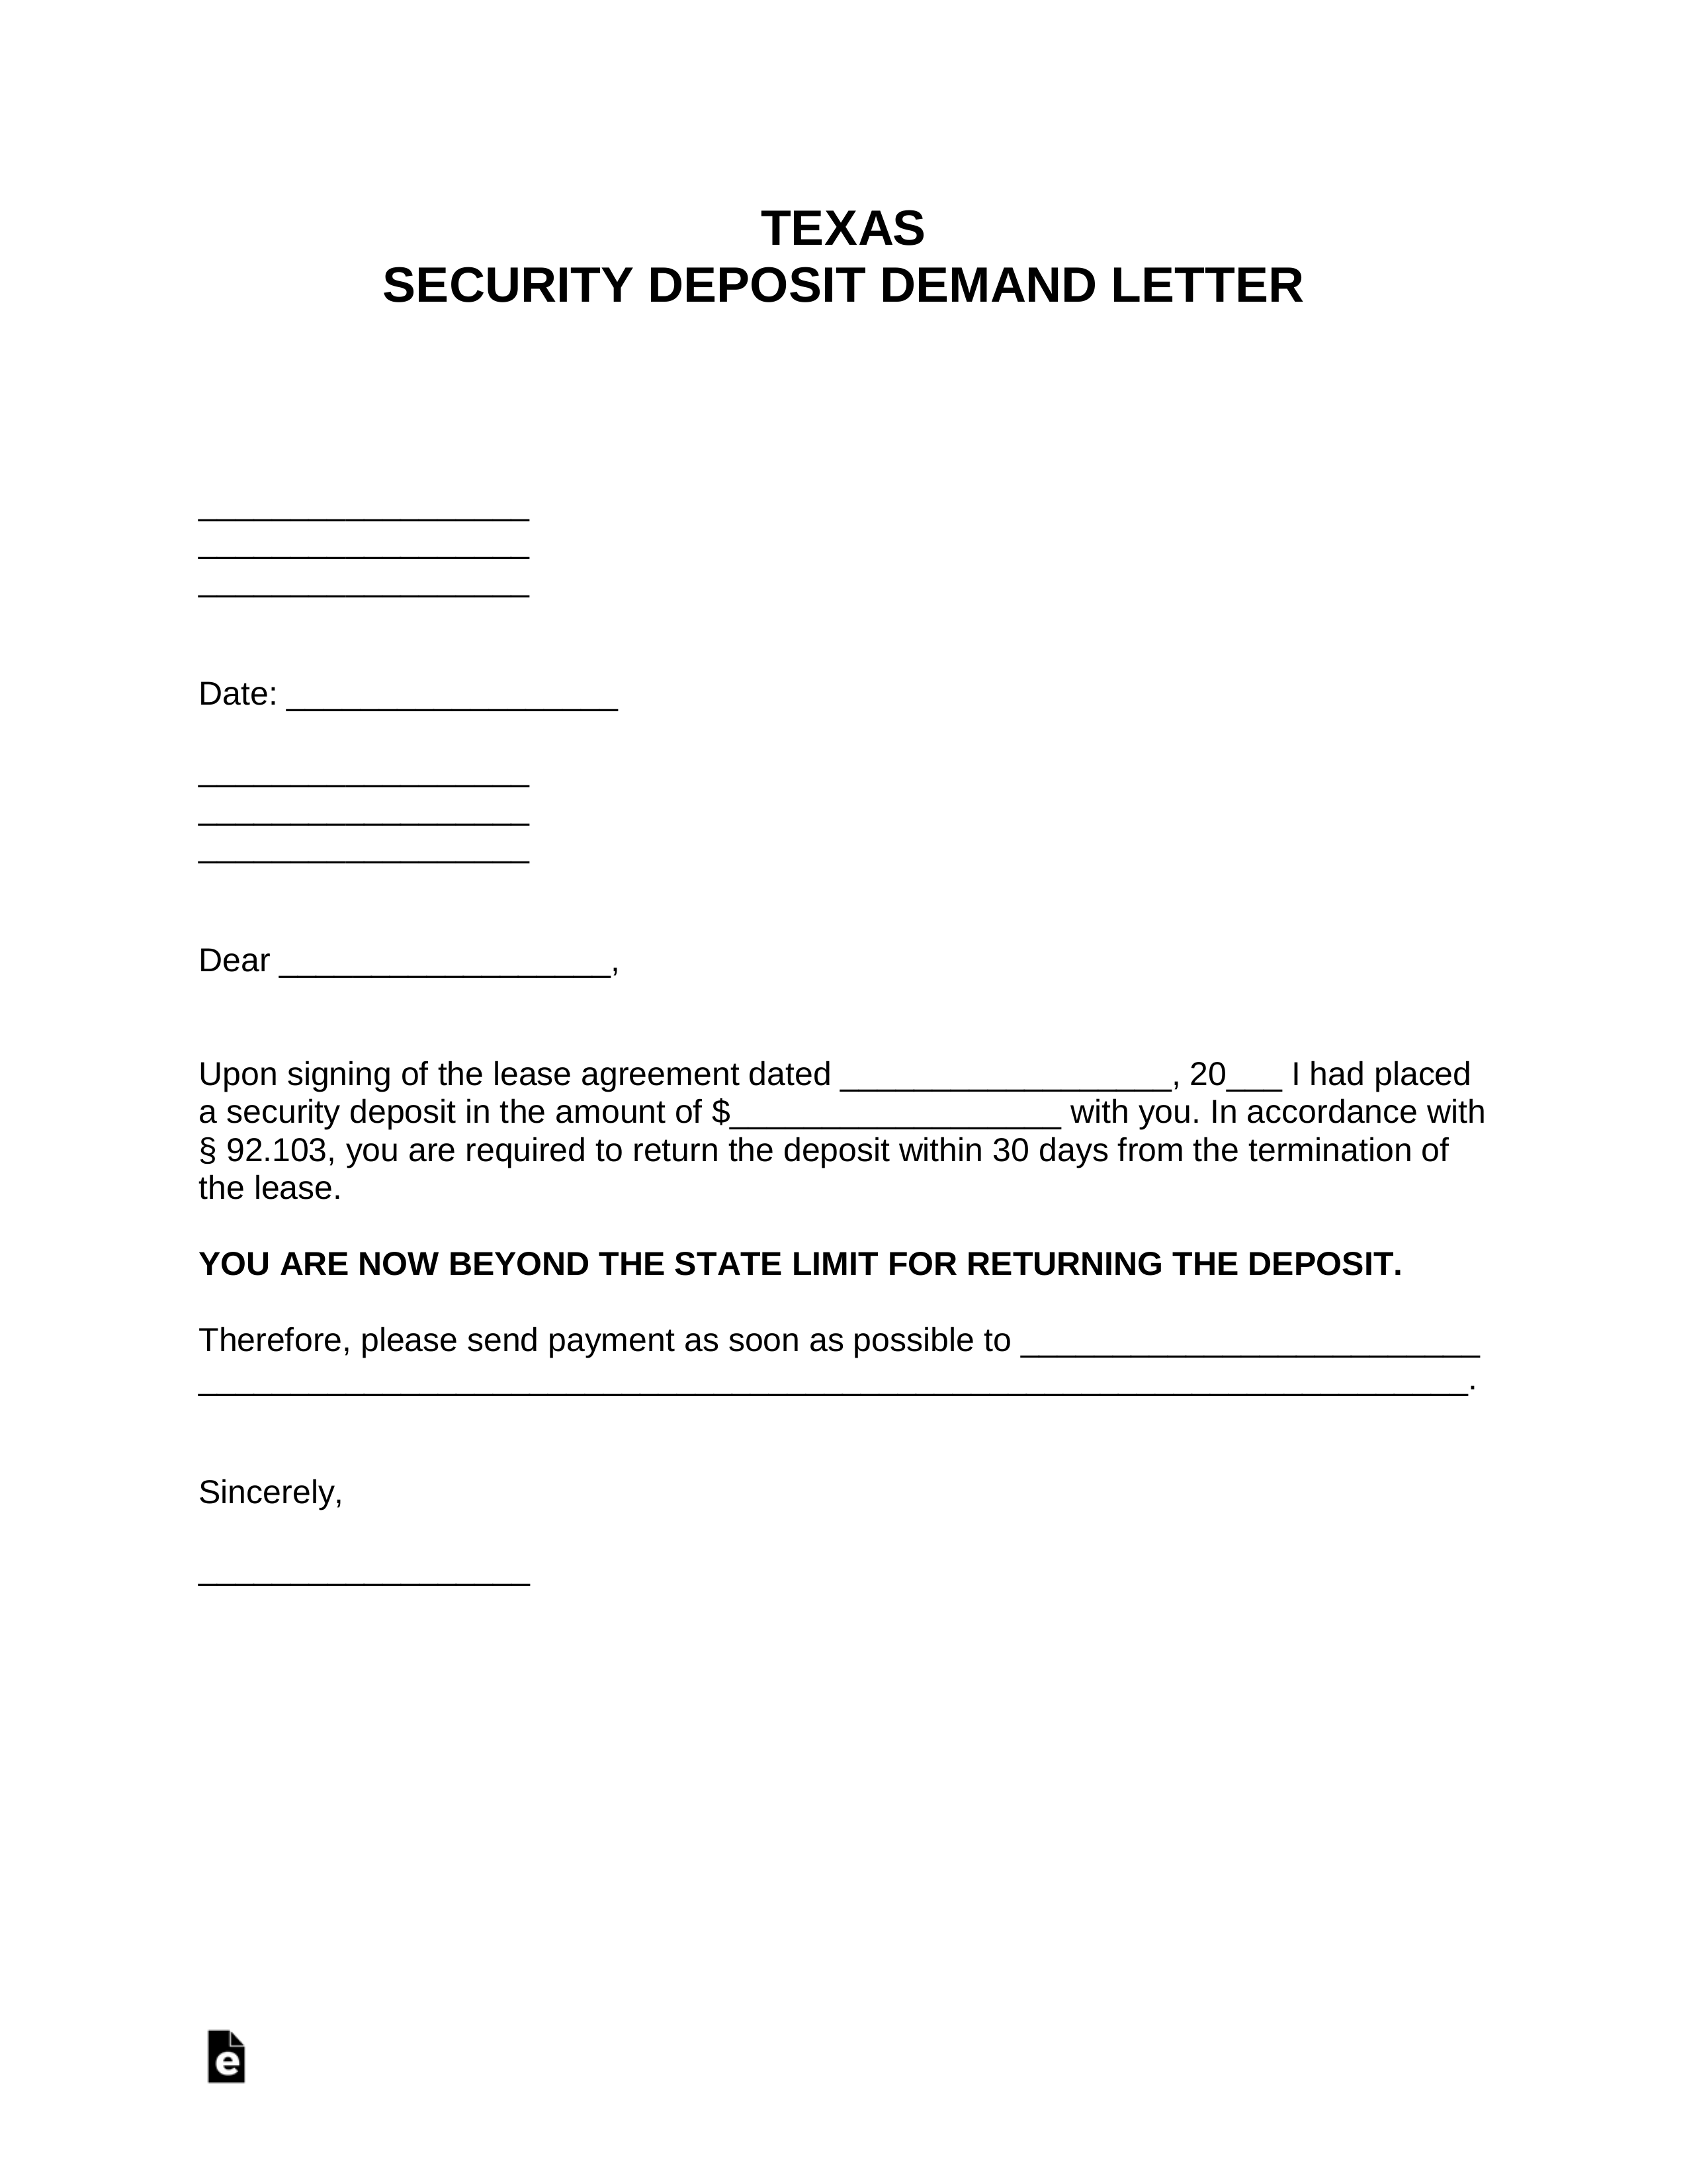 Texas Security Deposit Demand Letter